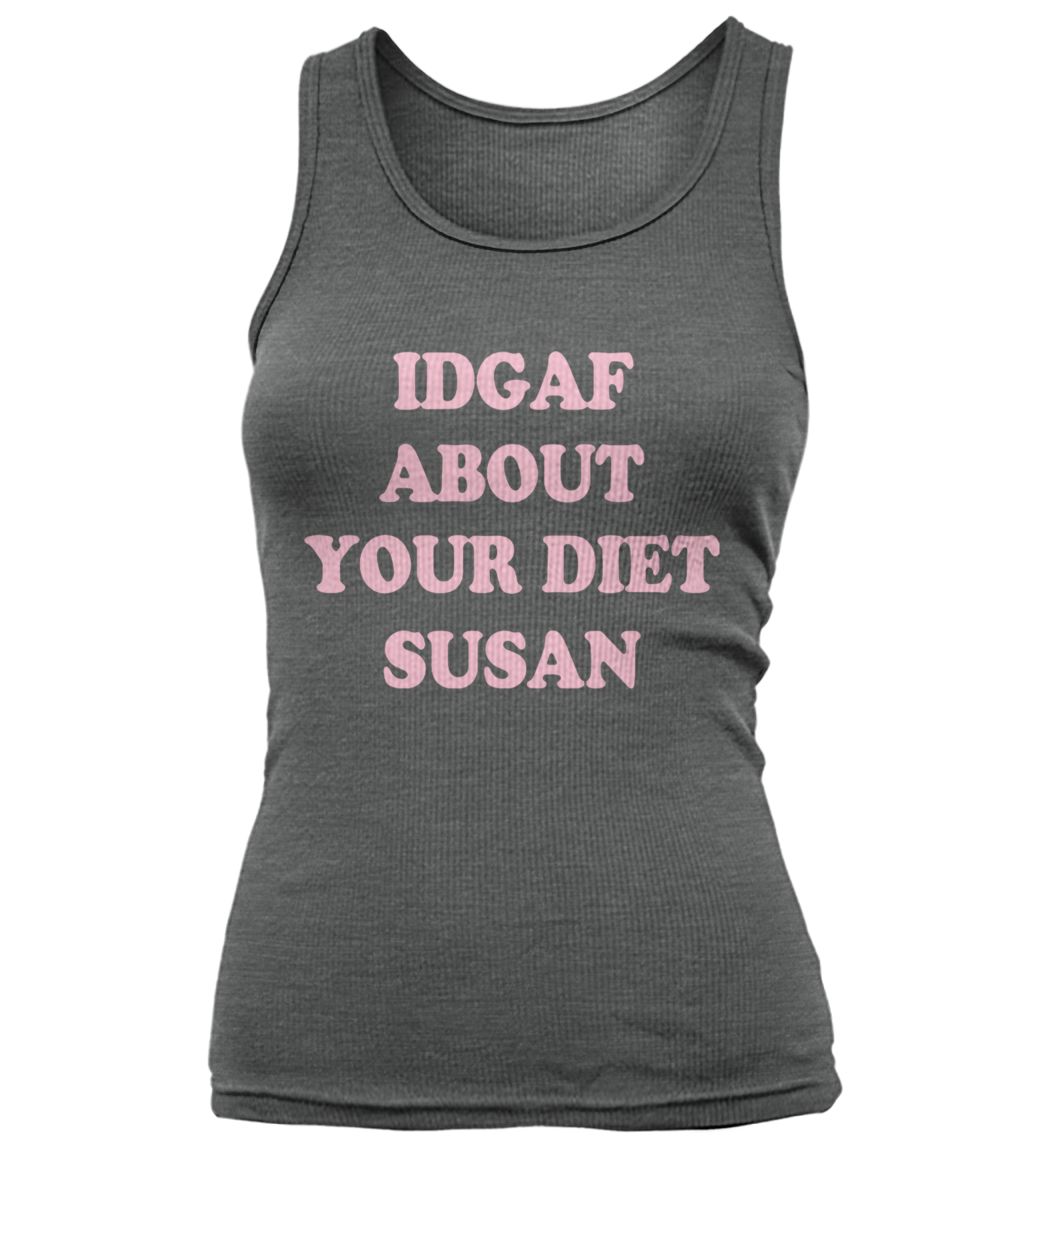 IDGAF about your diet susan women's tank top